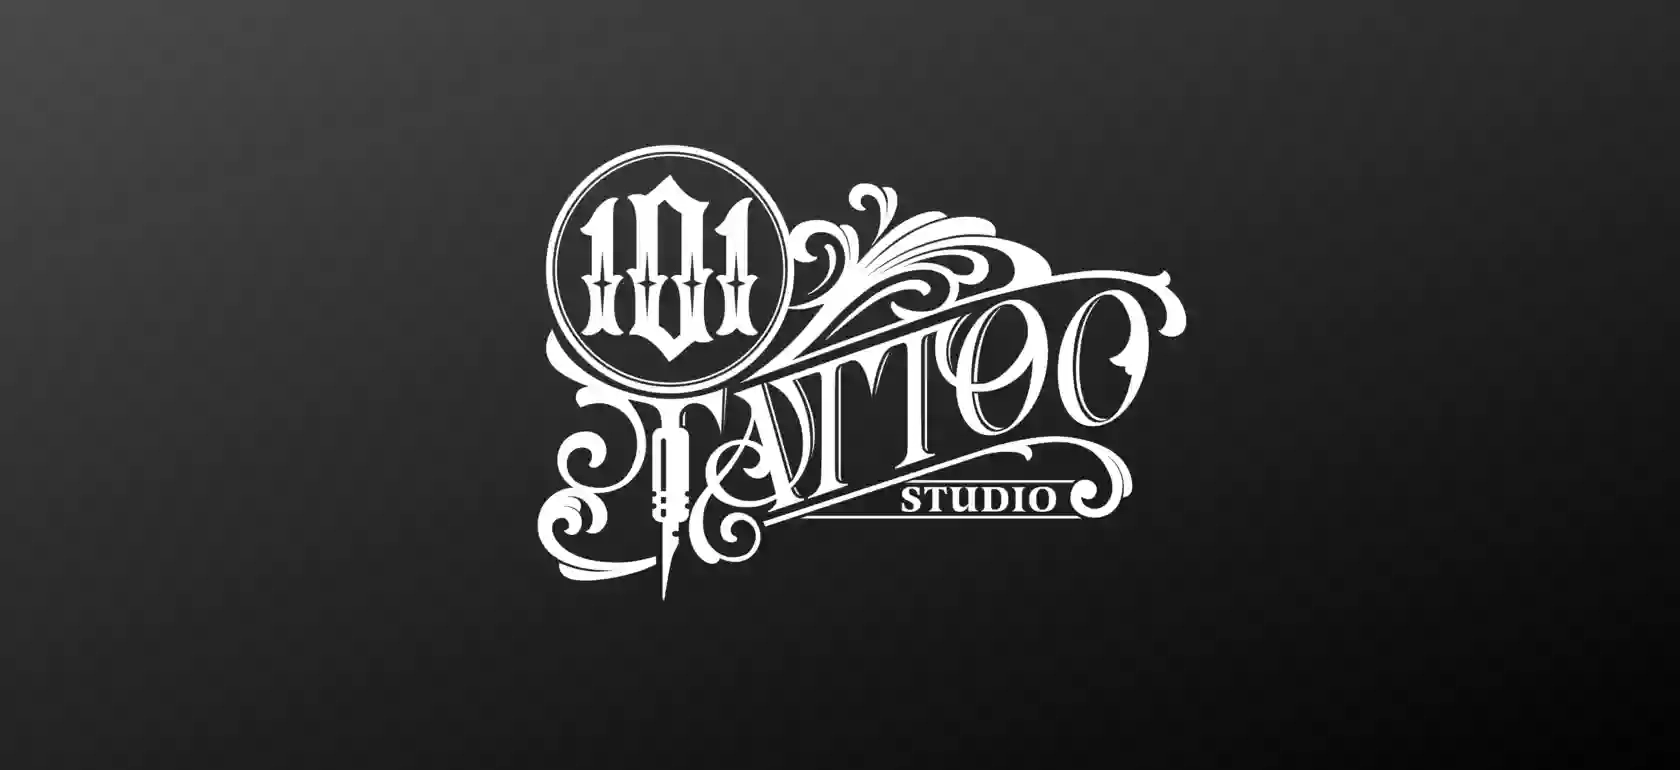 101 Tattoo Studio